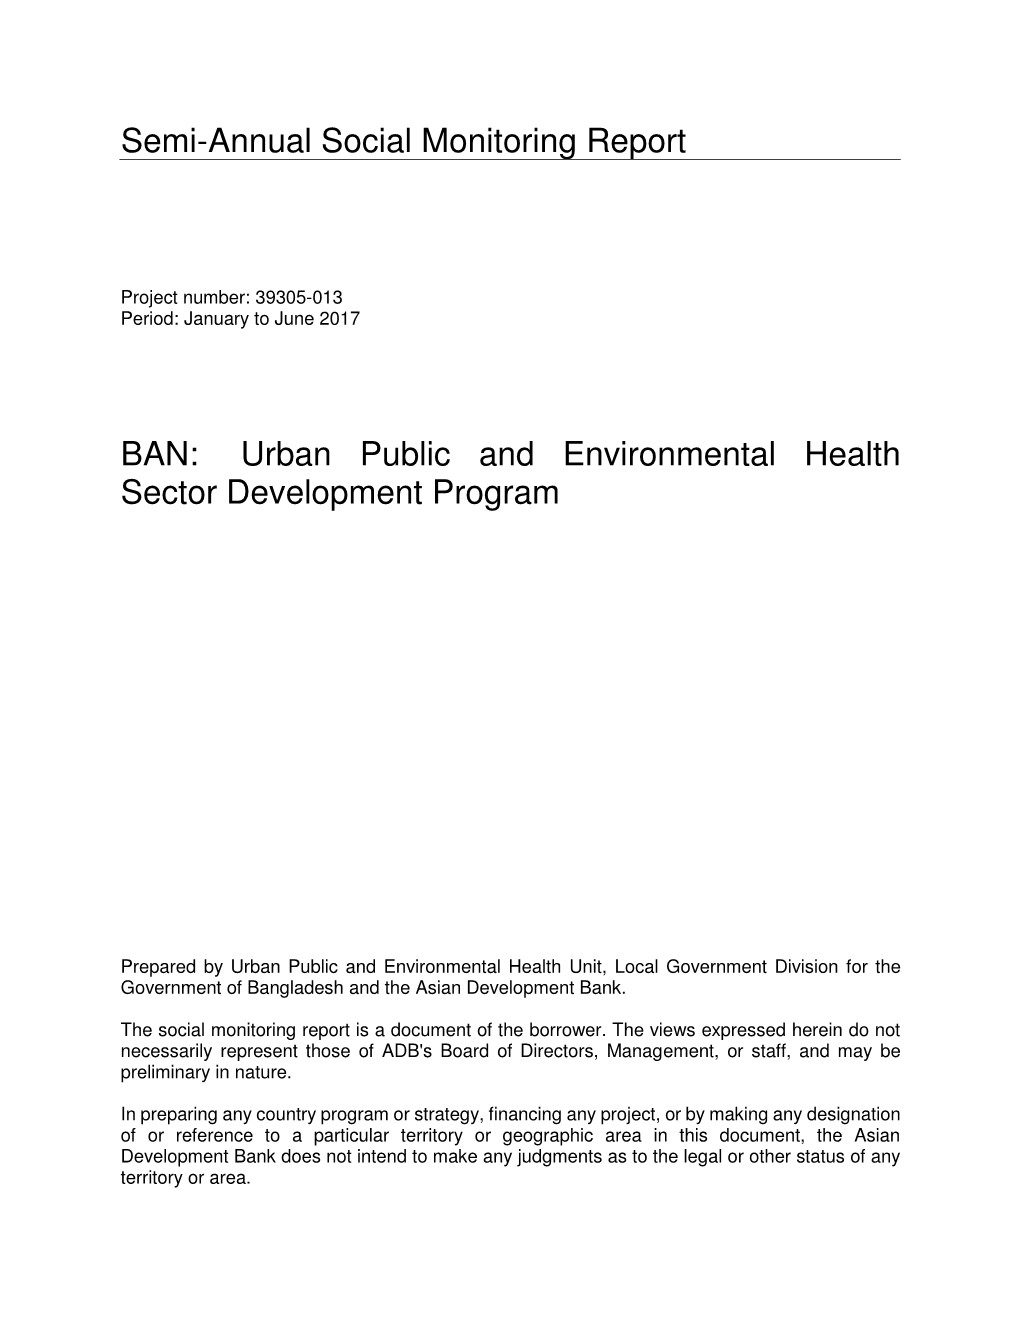 BAN: Urban Public and Environmental Health Sector Development Program